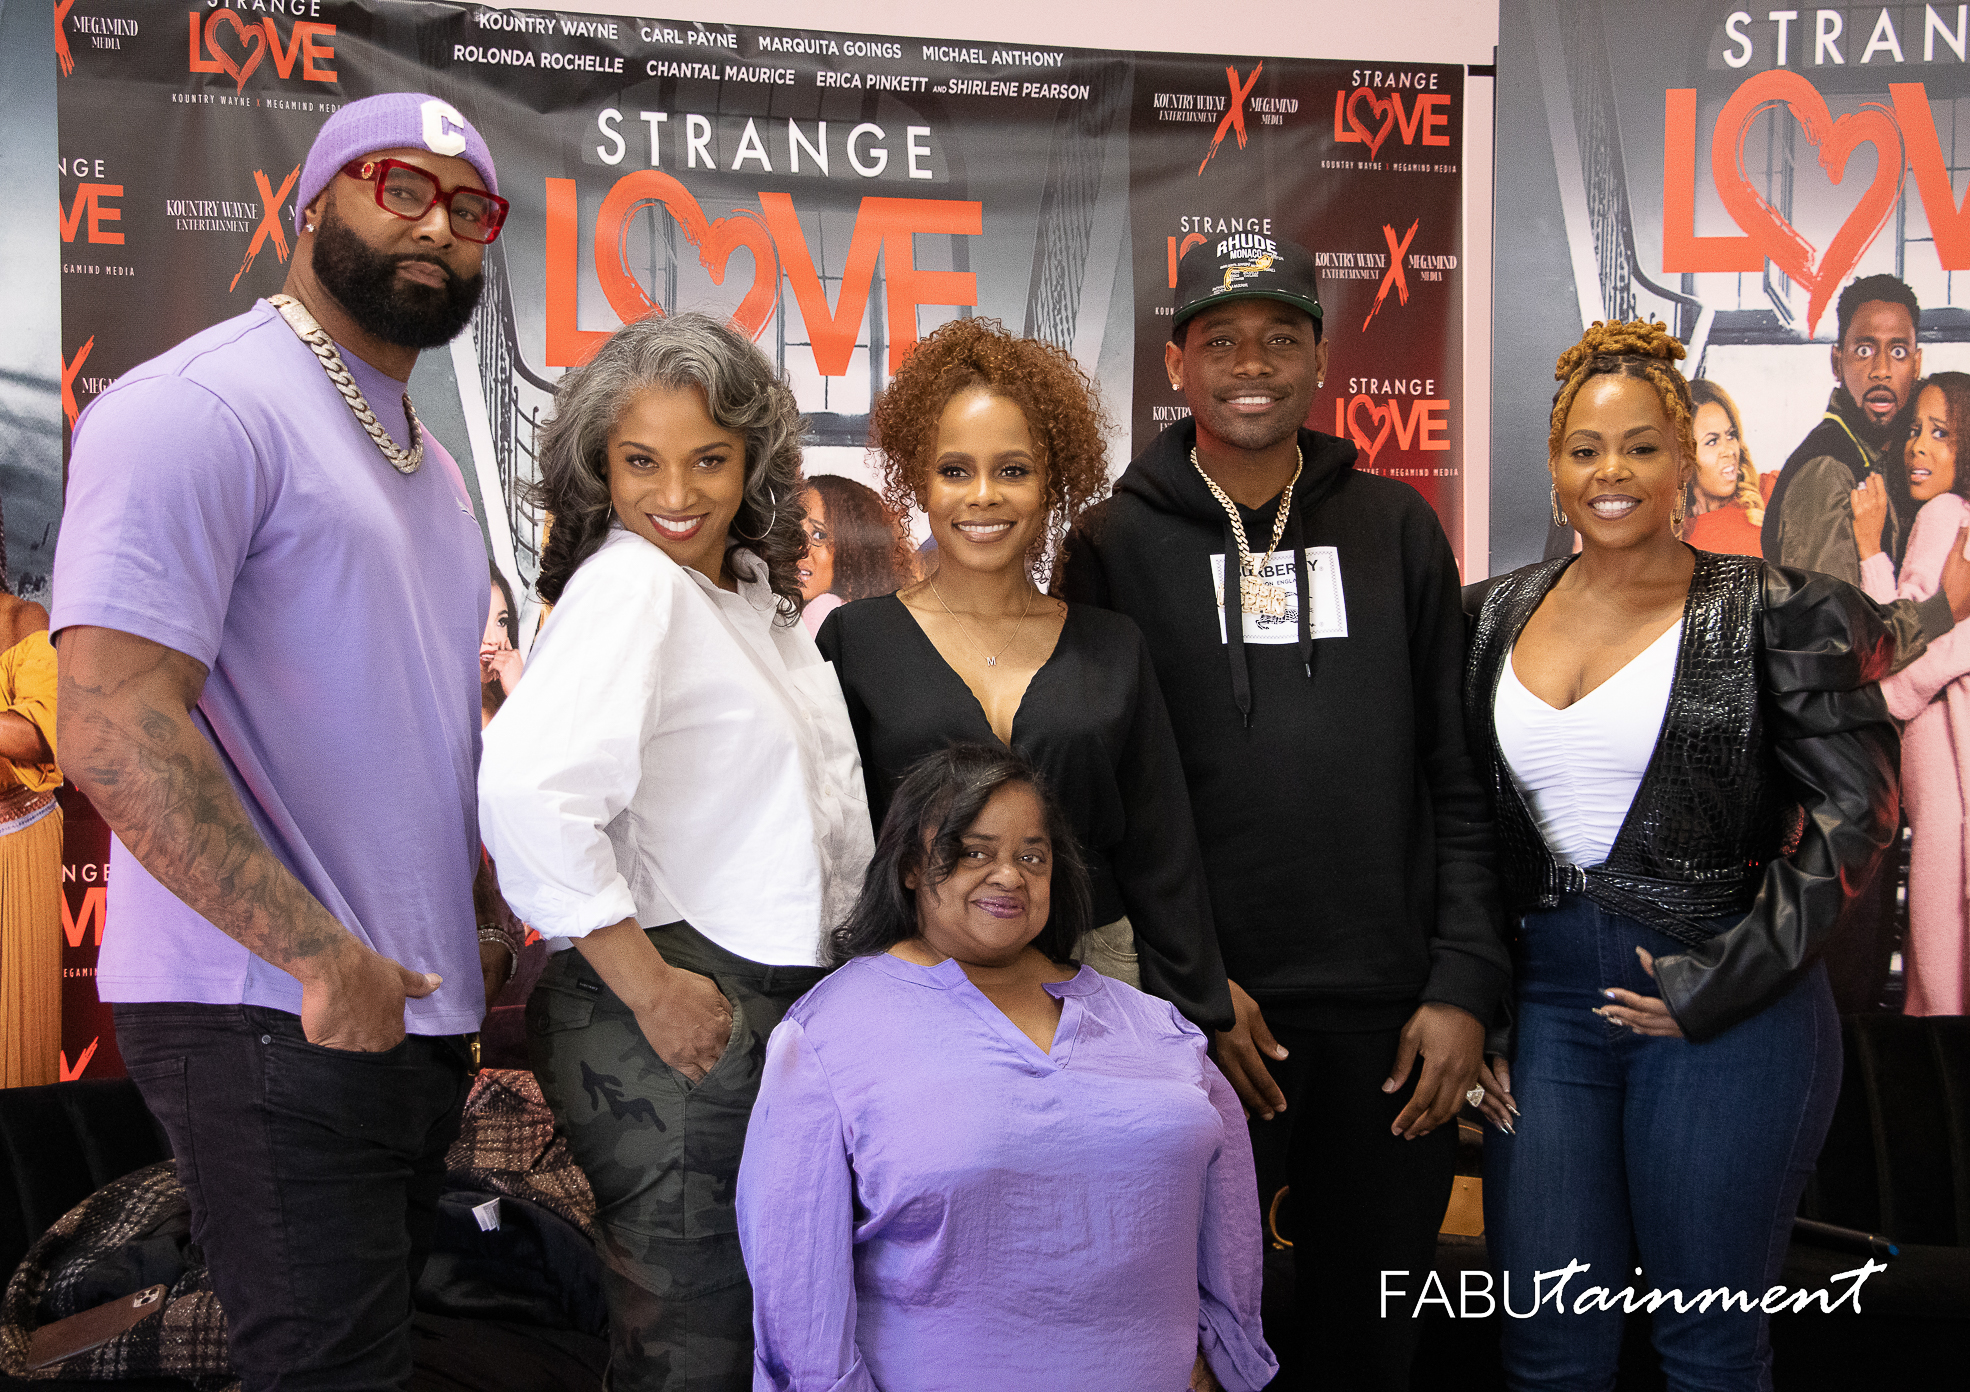 Kountry Wayne and the Cast of ‘Strange Love’ Discuss New Film